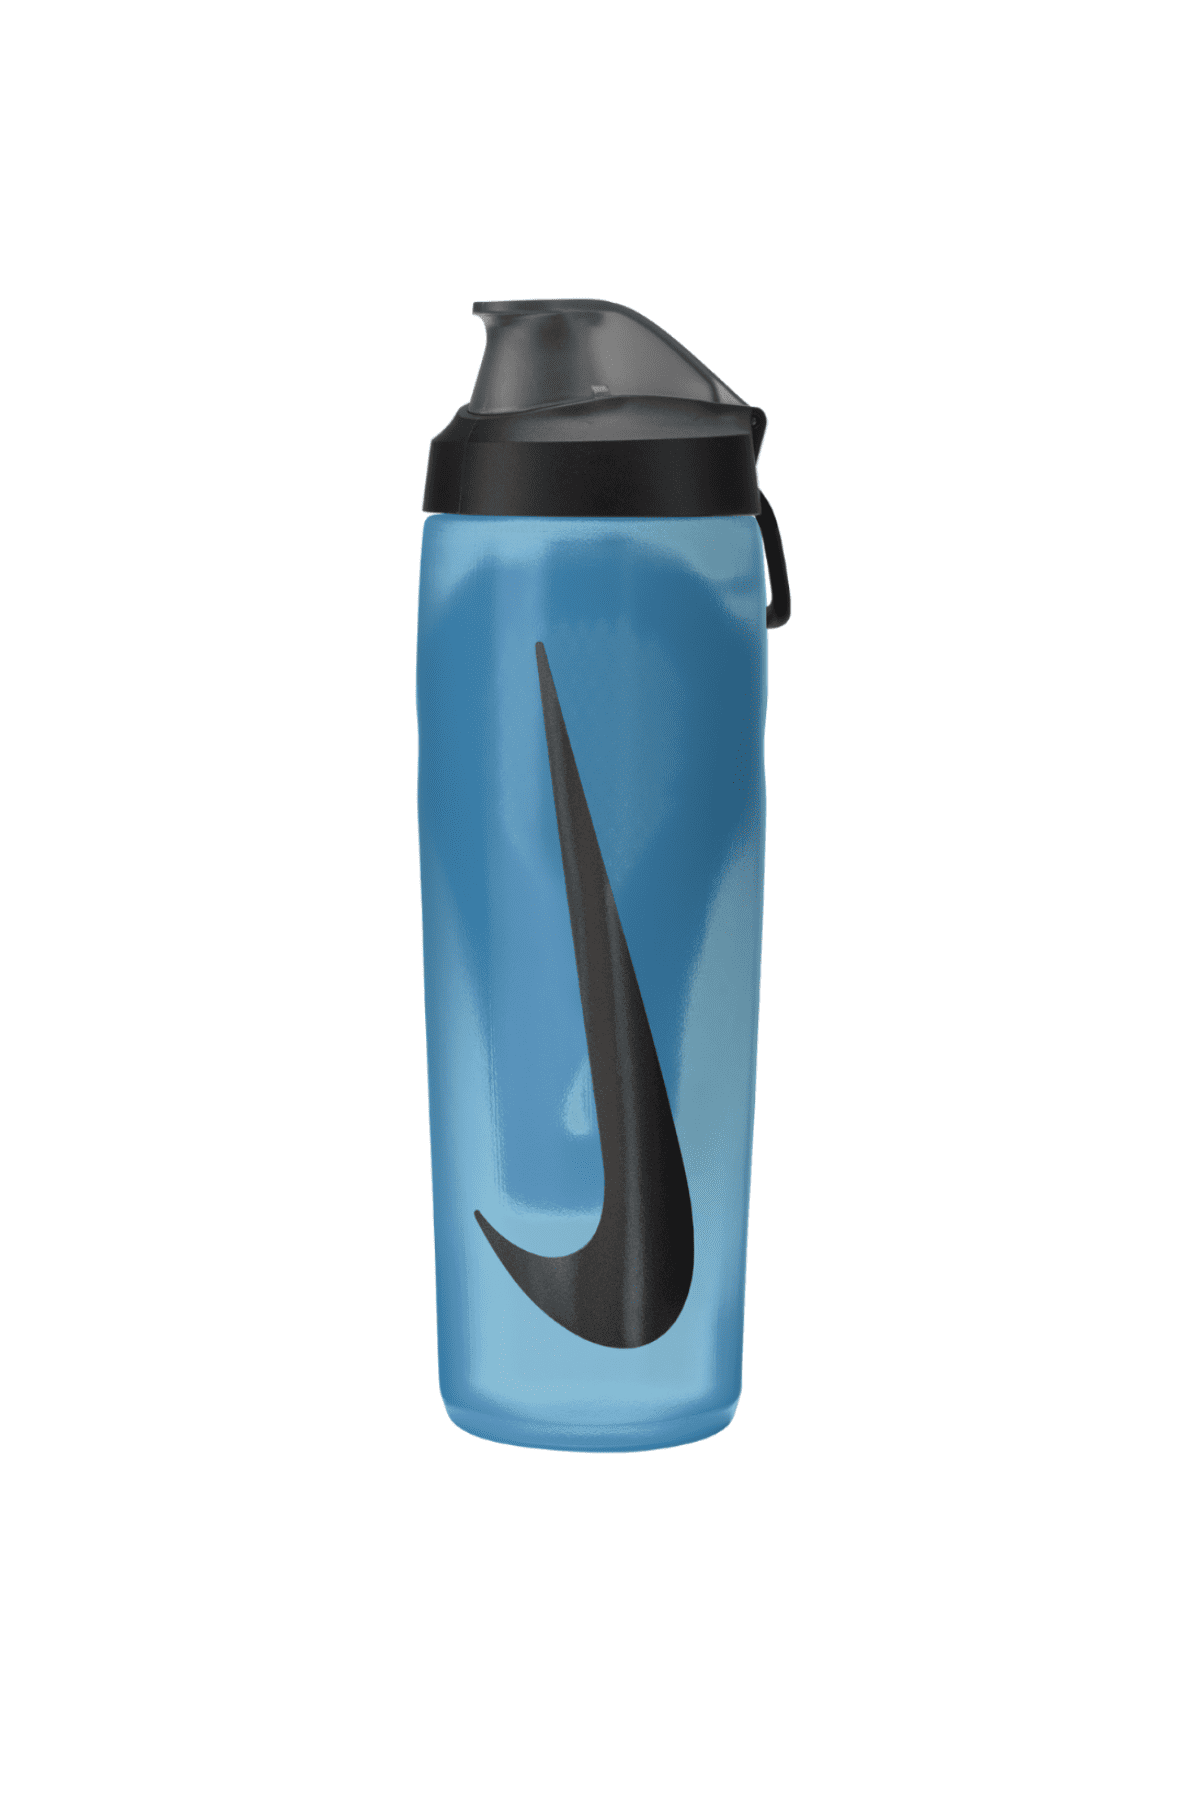 NIKE REFUEL בקבוק מים - בקבוק ספורט עם מכסה נייק 700 מ"ל כחול-Nike-One size-נאקו